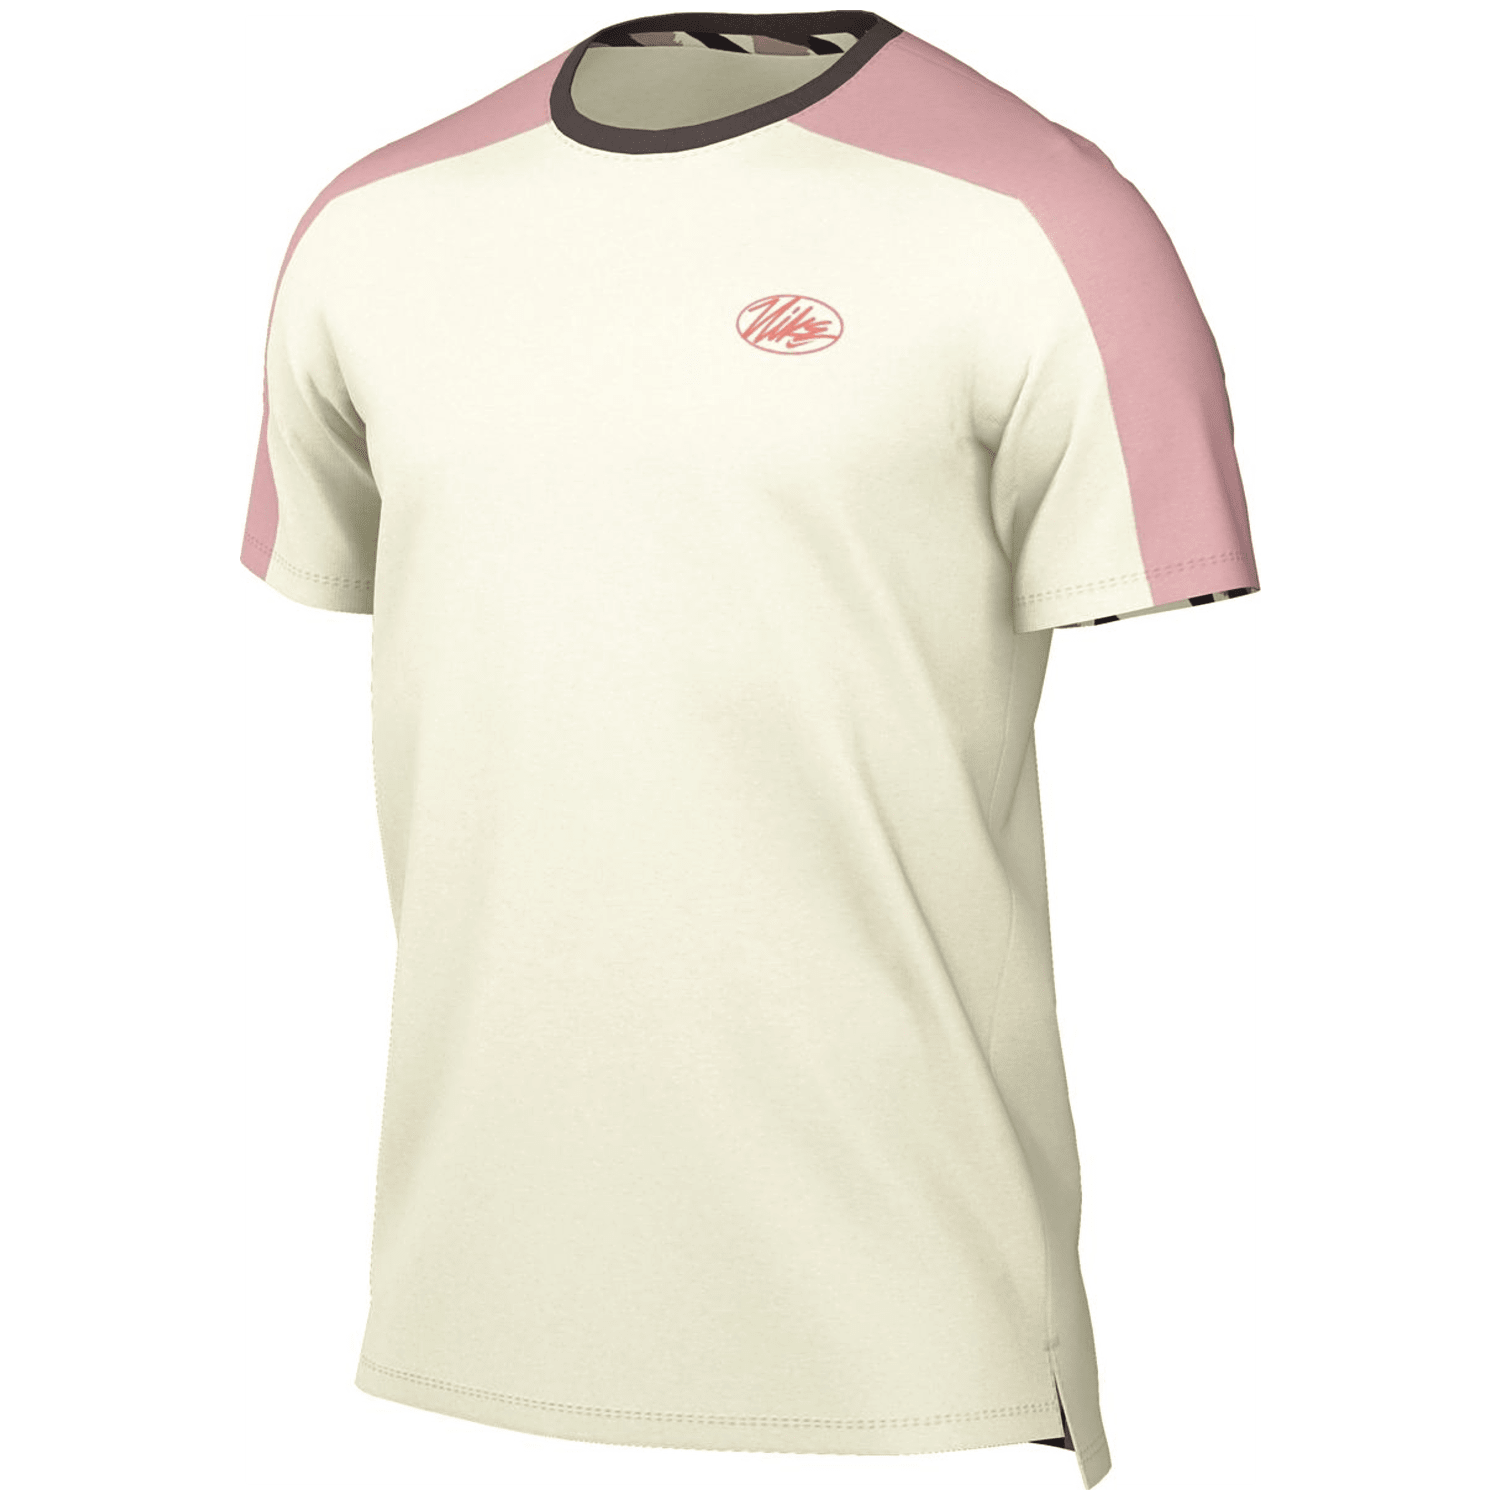 Nike Sport Clash Training Top Herren T-Shirt